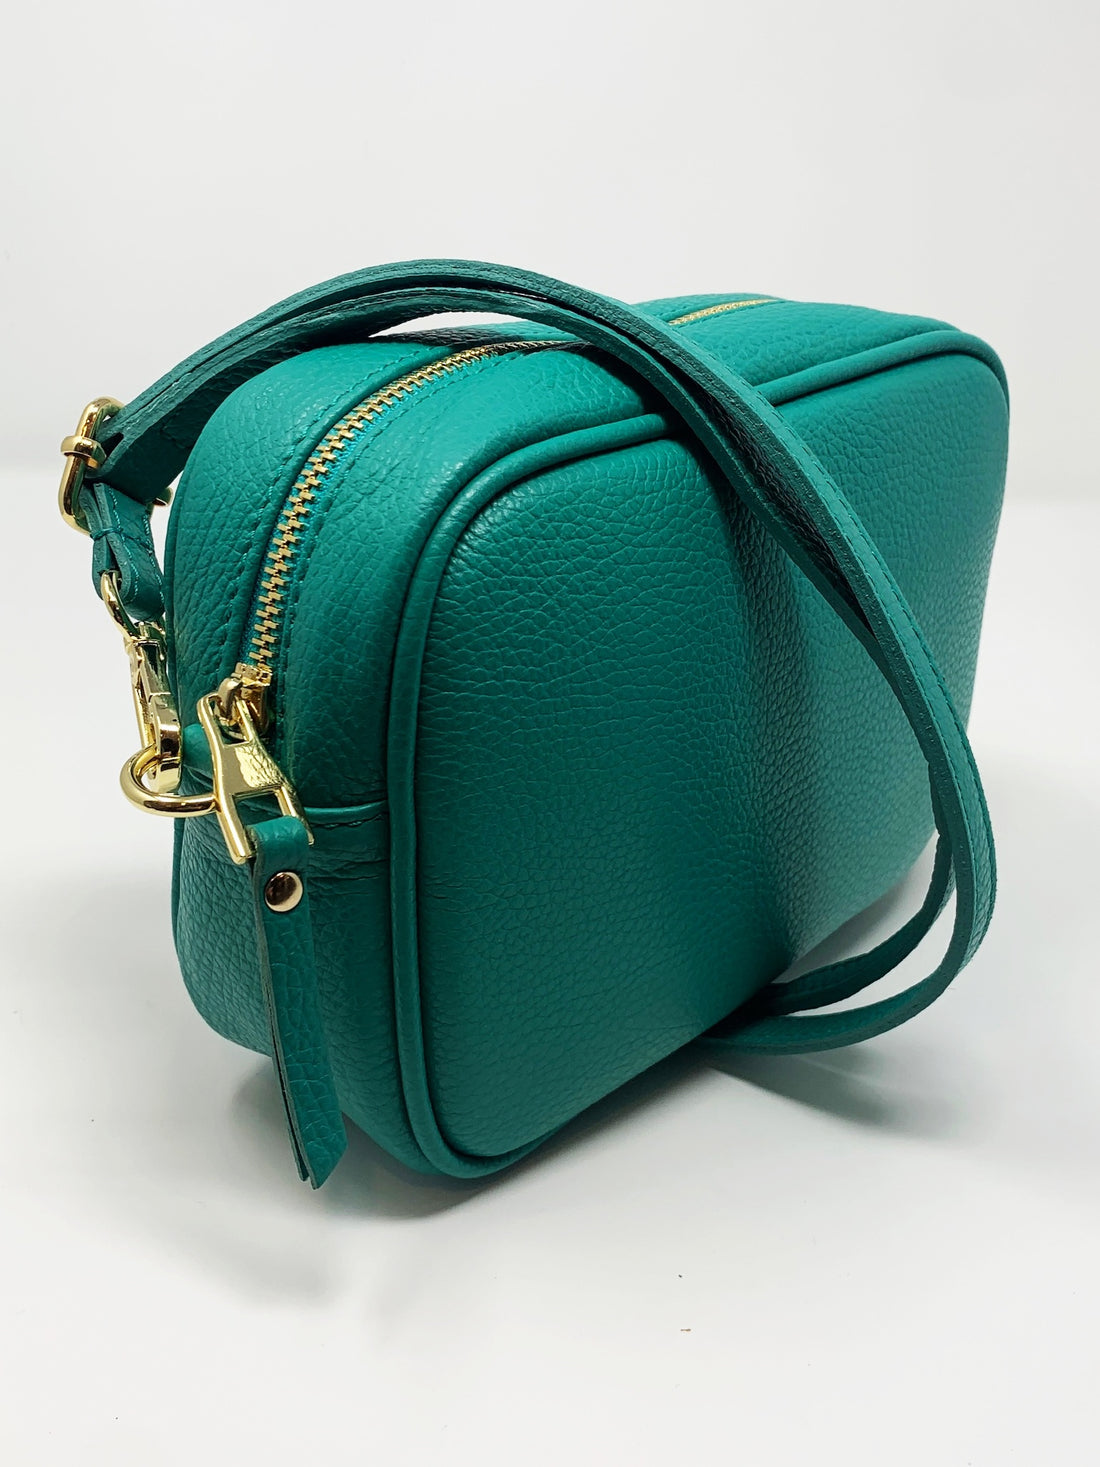 Firenze Bag in Jade